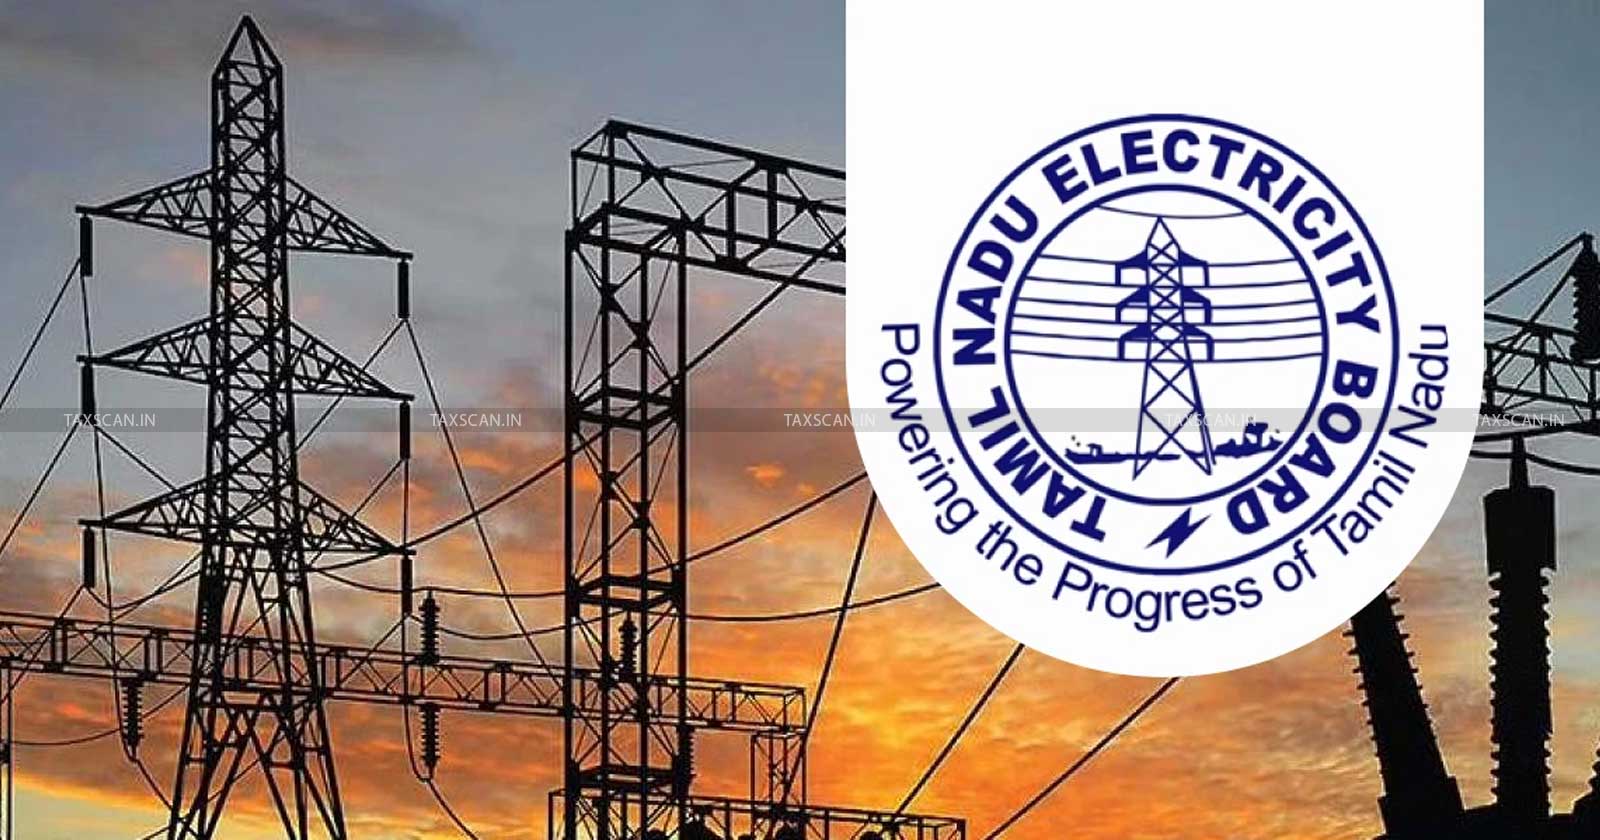 Tamil Nadu Electricity Board - Service Tax Demand on GTA Service - CESTAT - taxscan